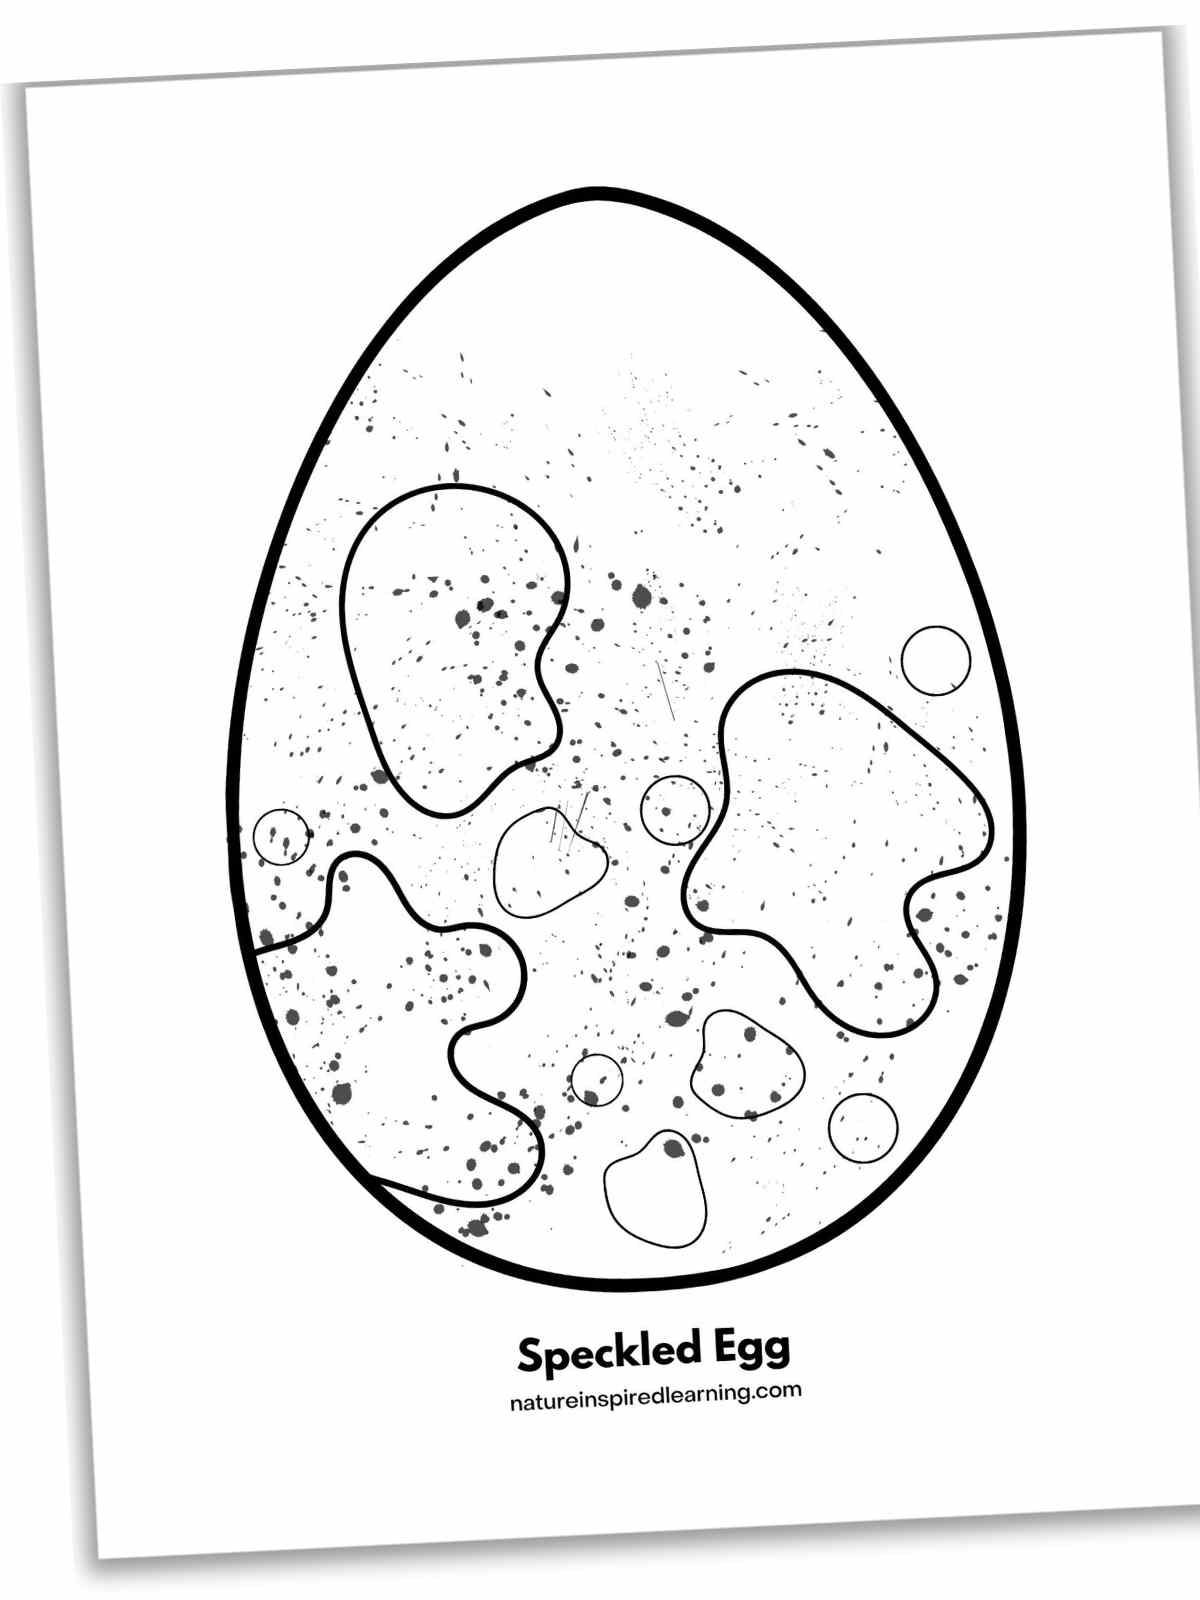 Large egg with a random speckled design